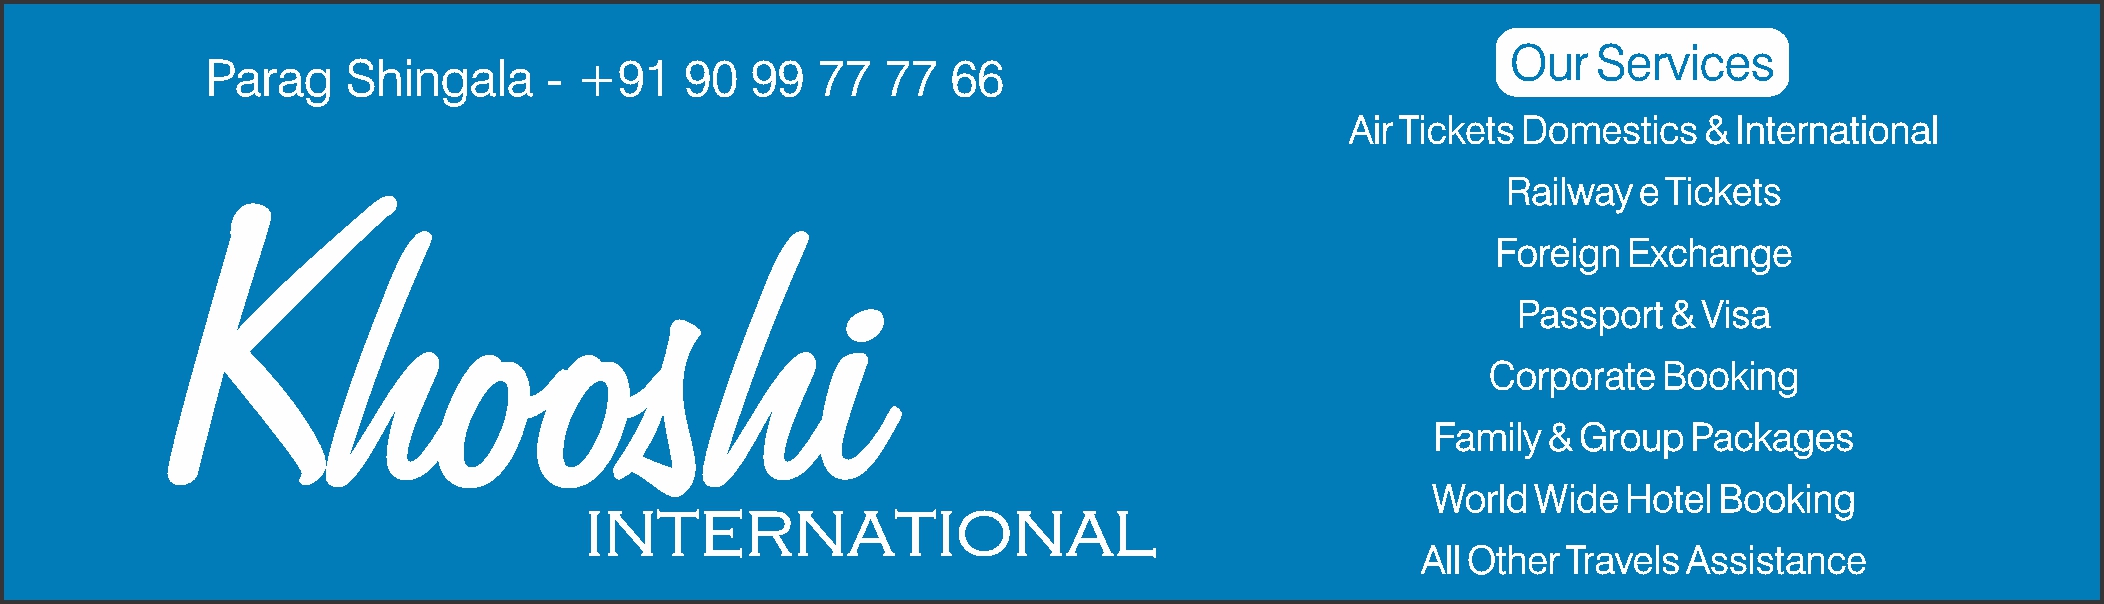 Khooshi International